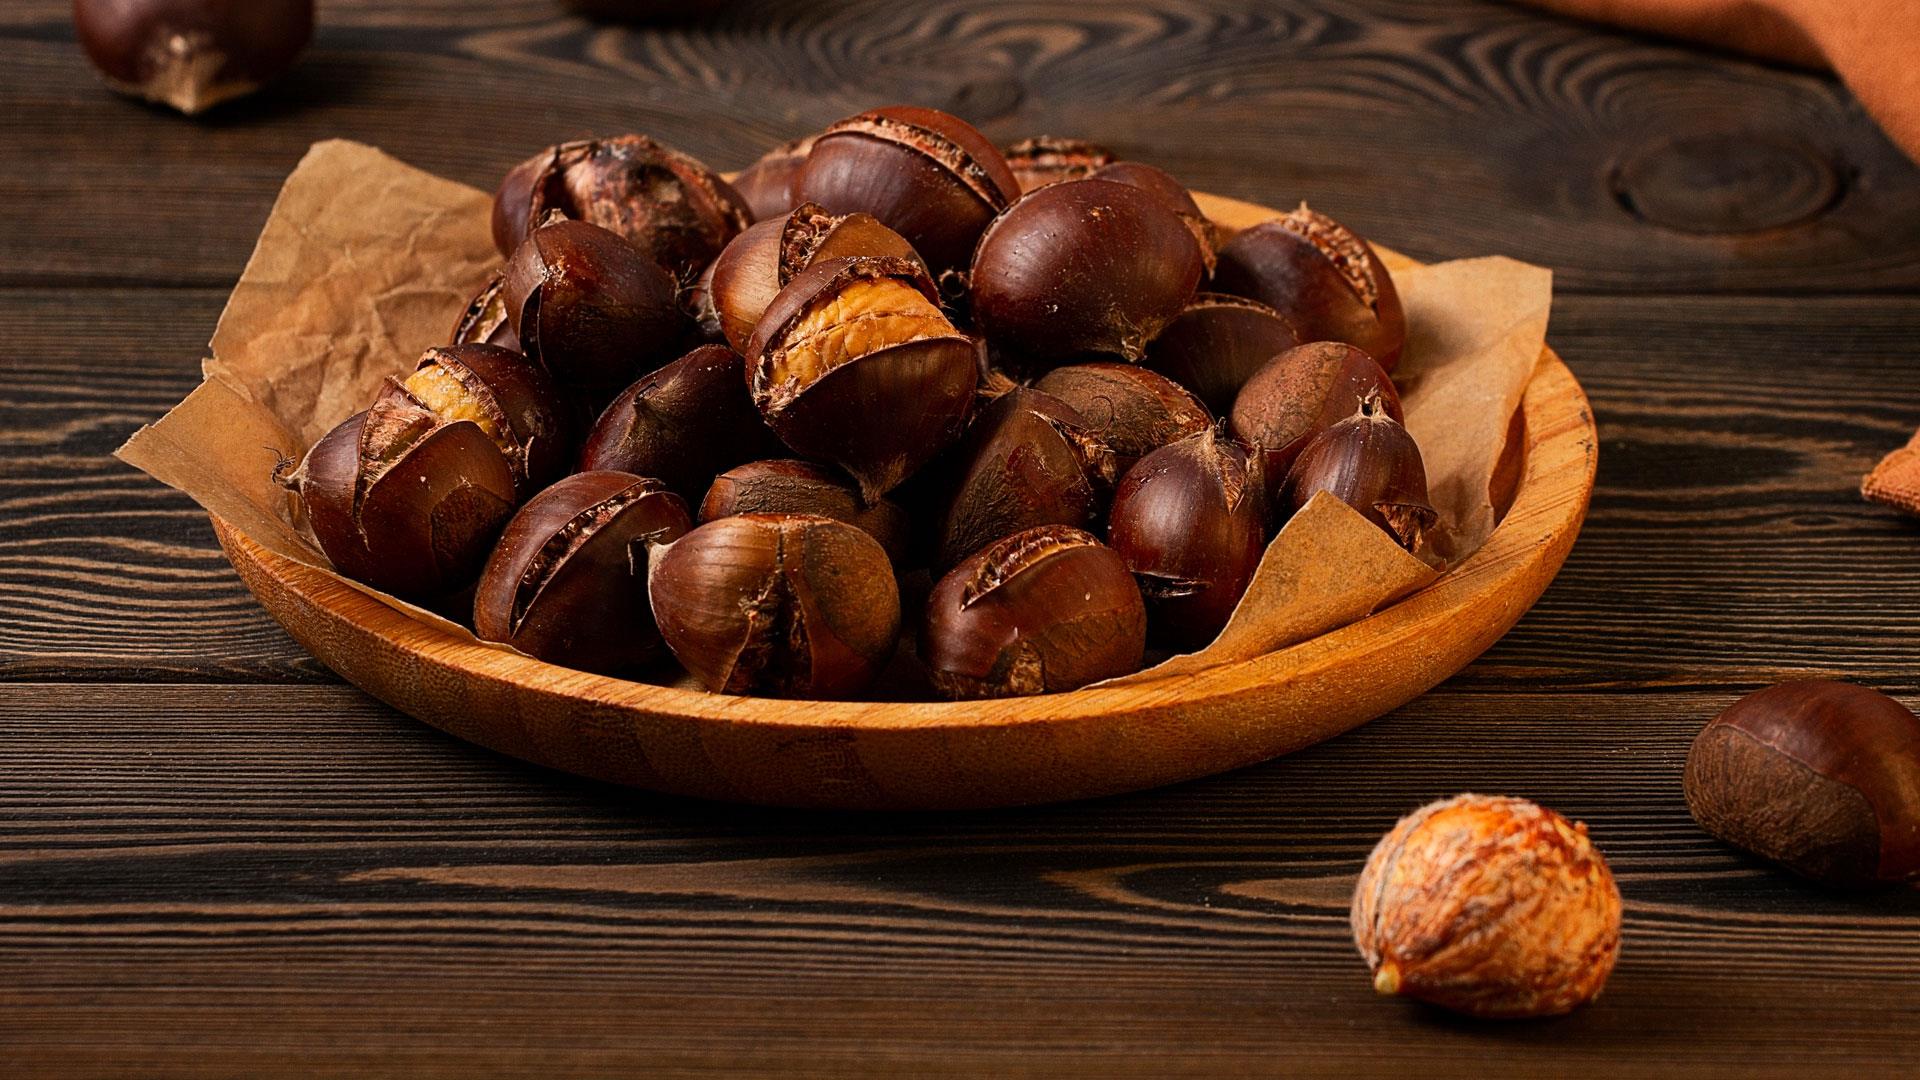 Roasted chesnuts